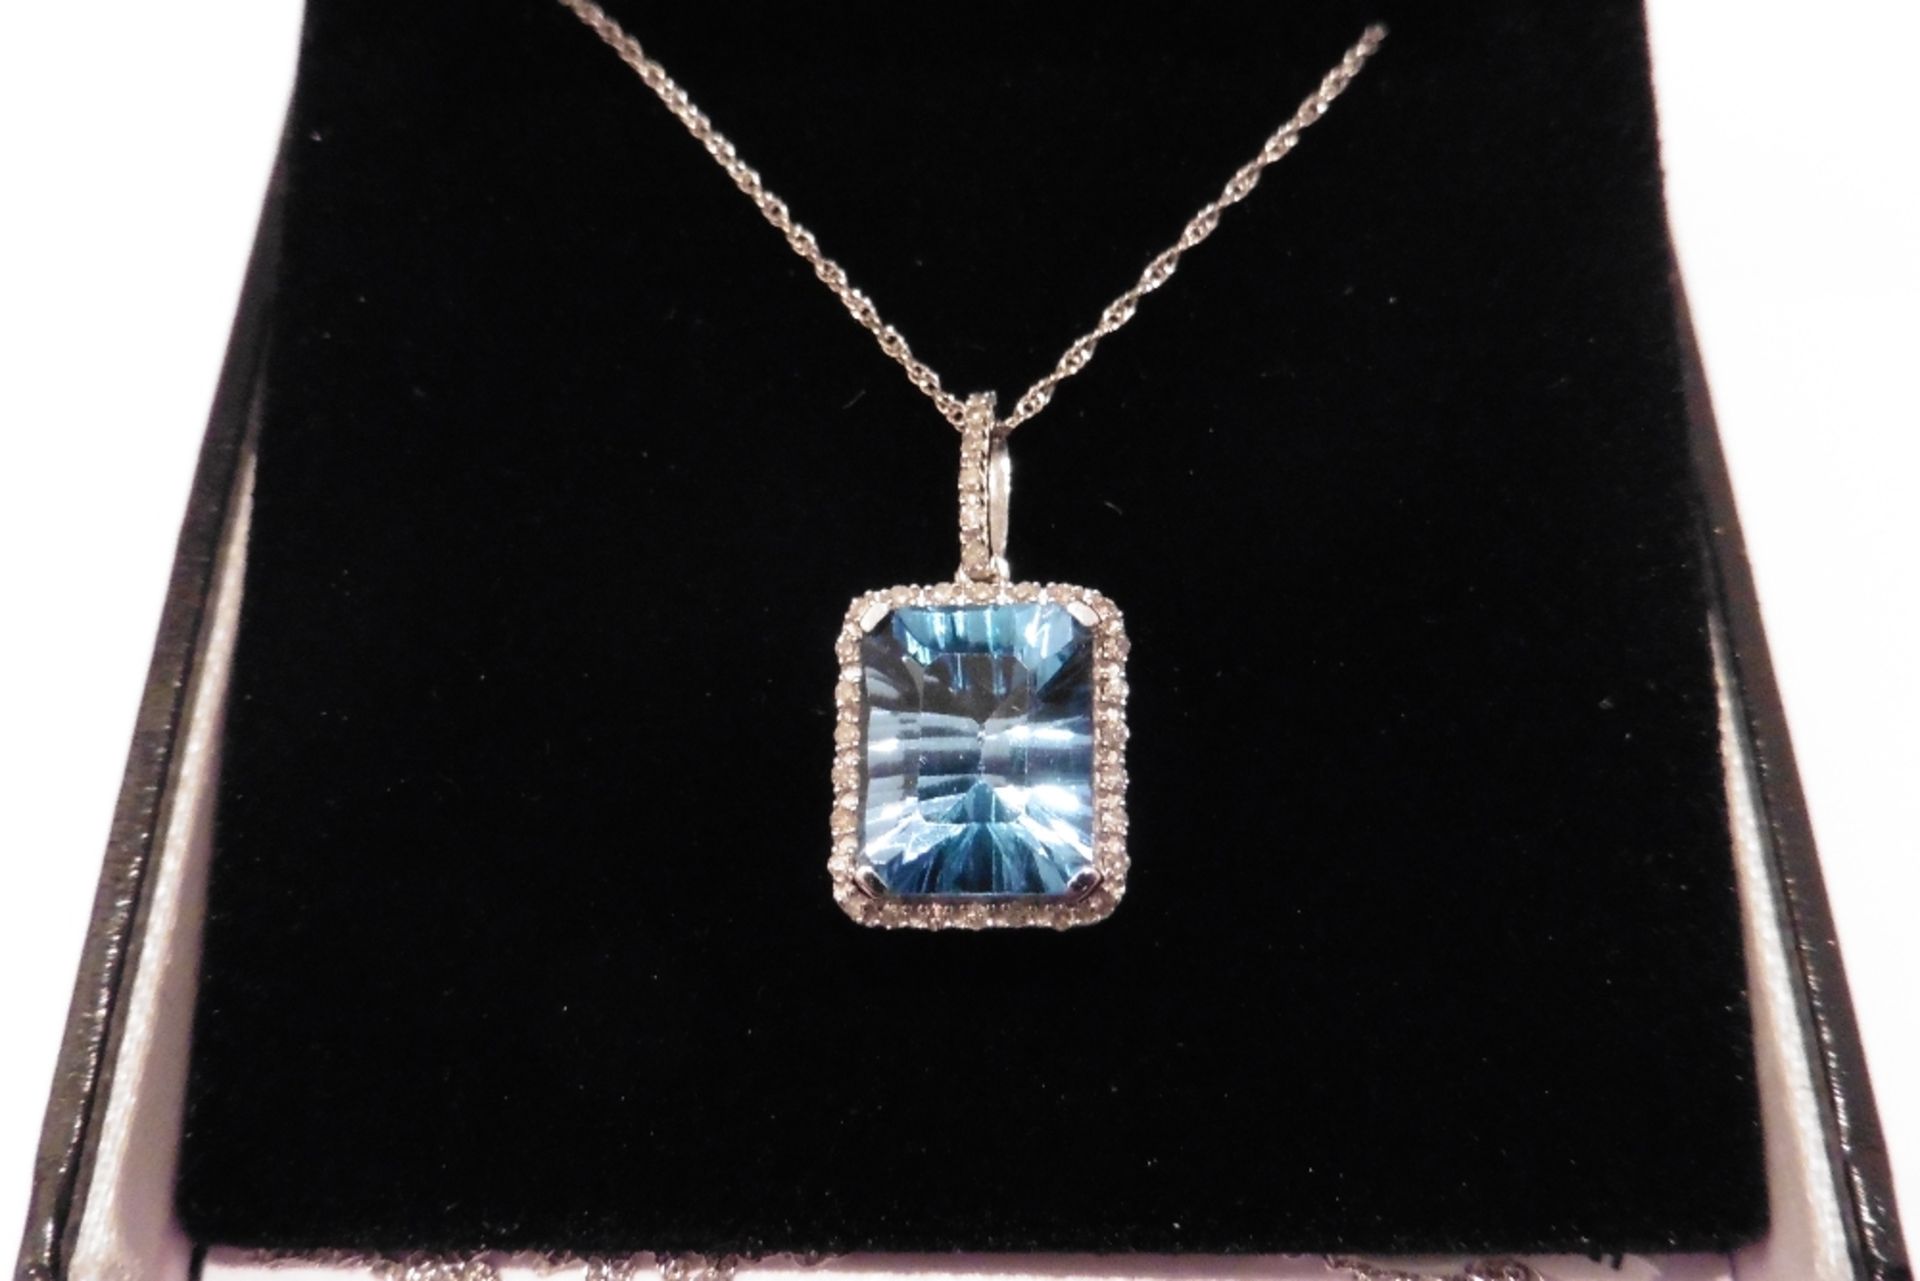 Modern 9ct white gold blue topaz and diamond pendant set with a single emerald cut blue topaz of bea